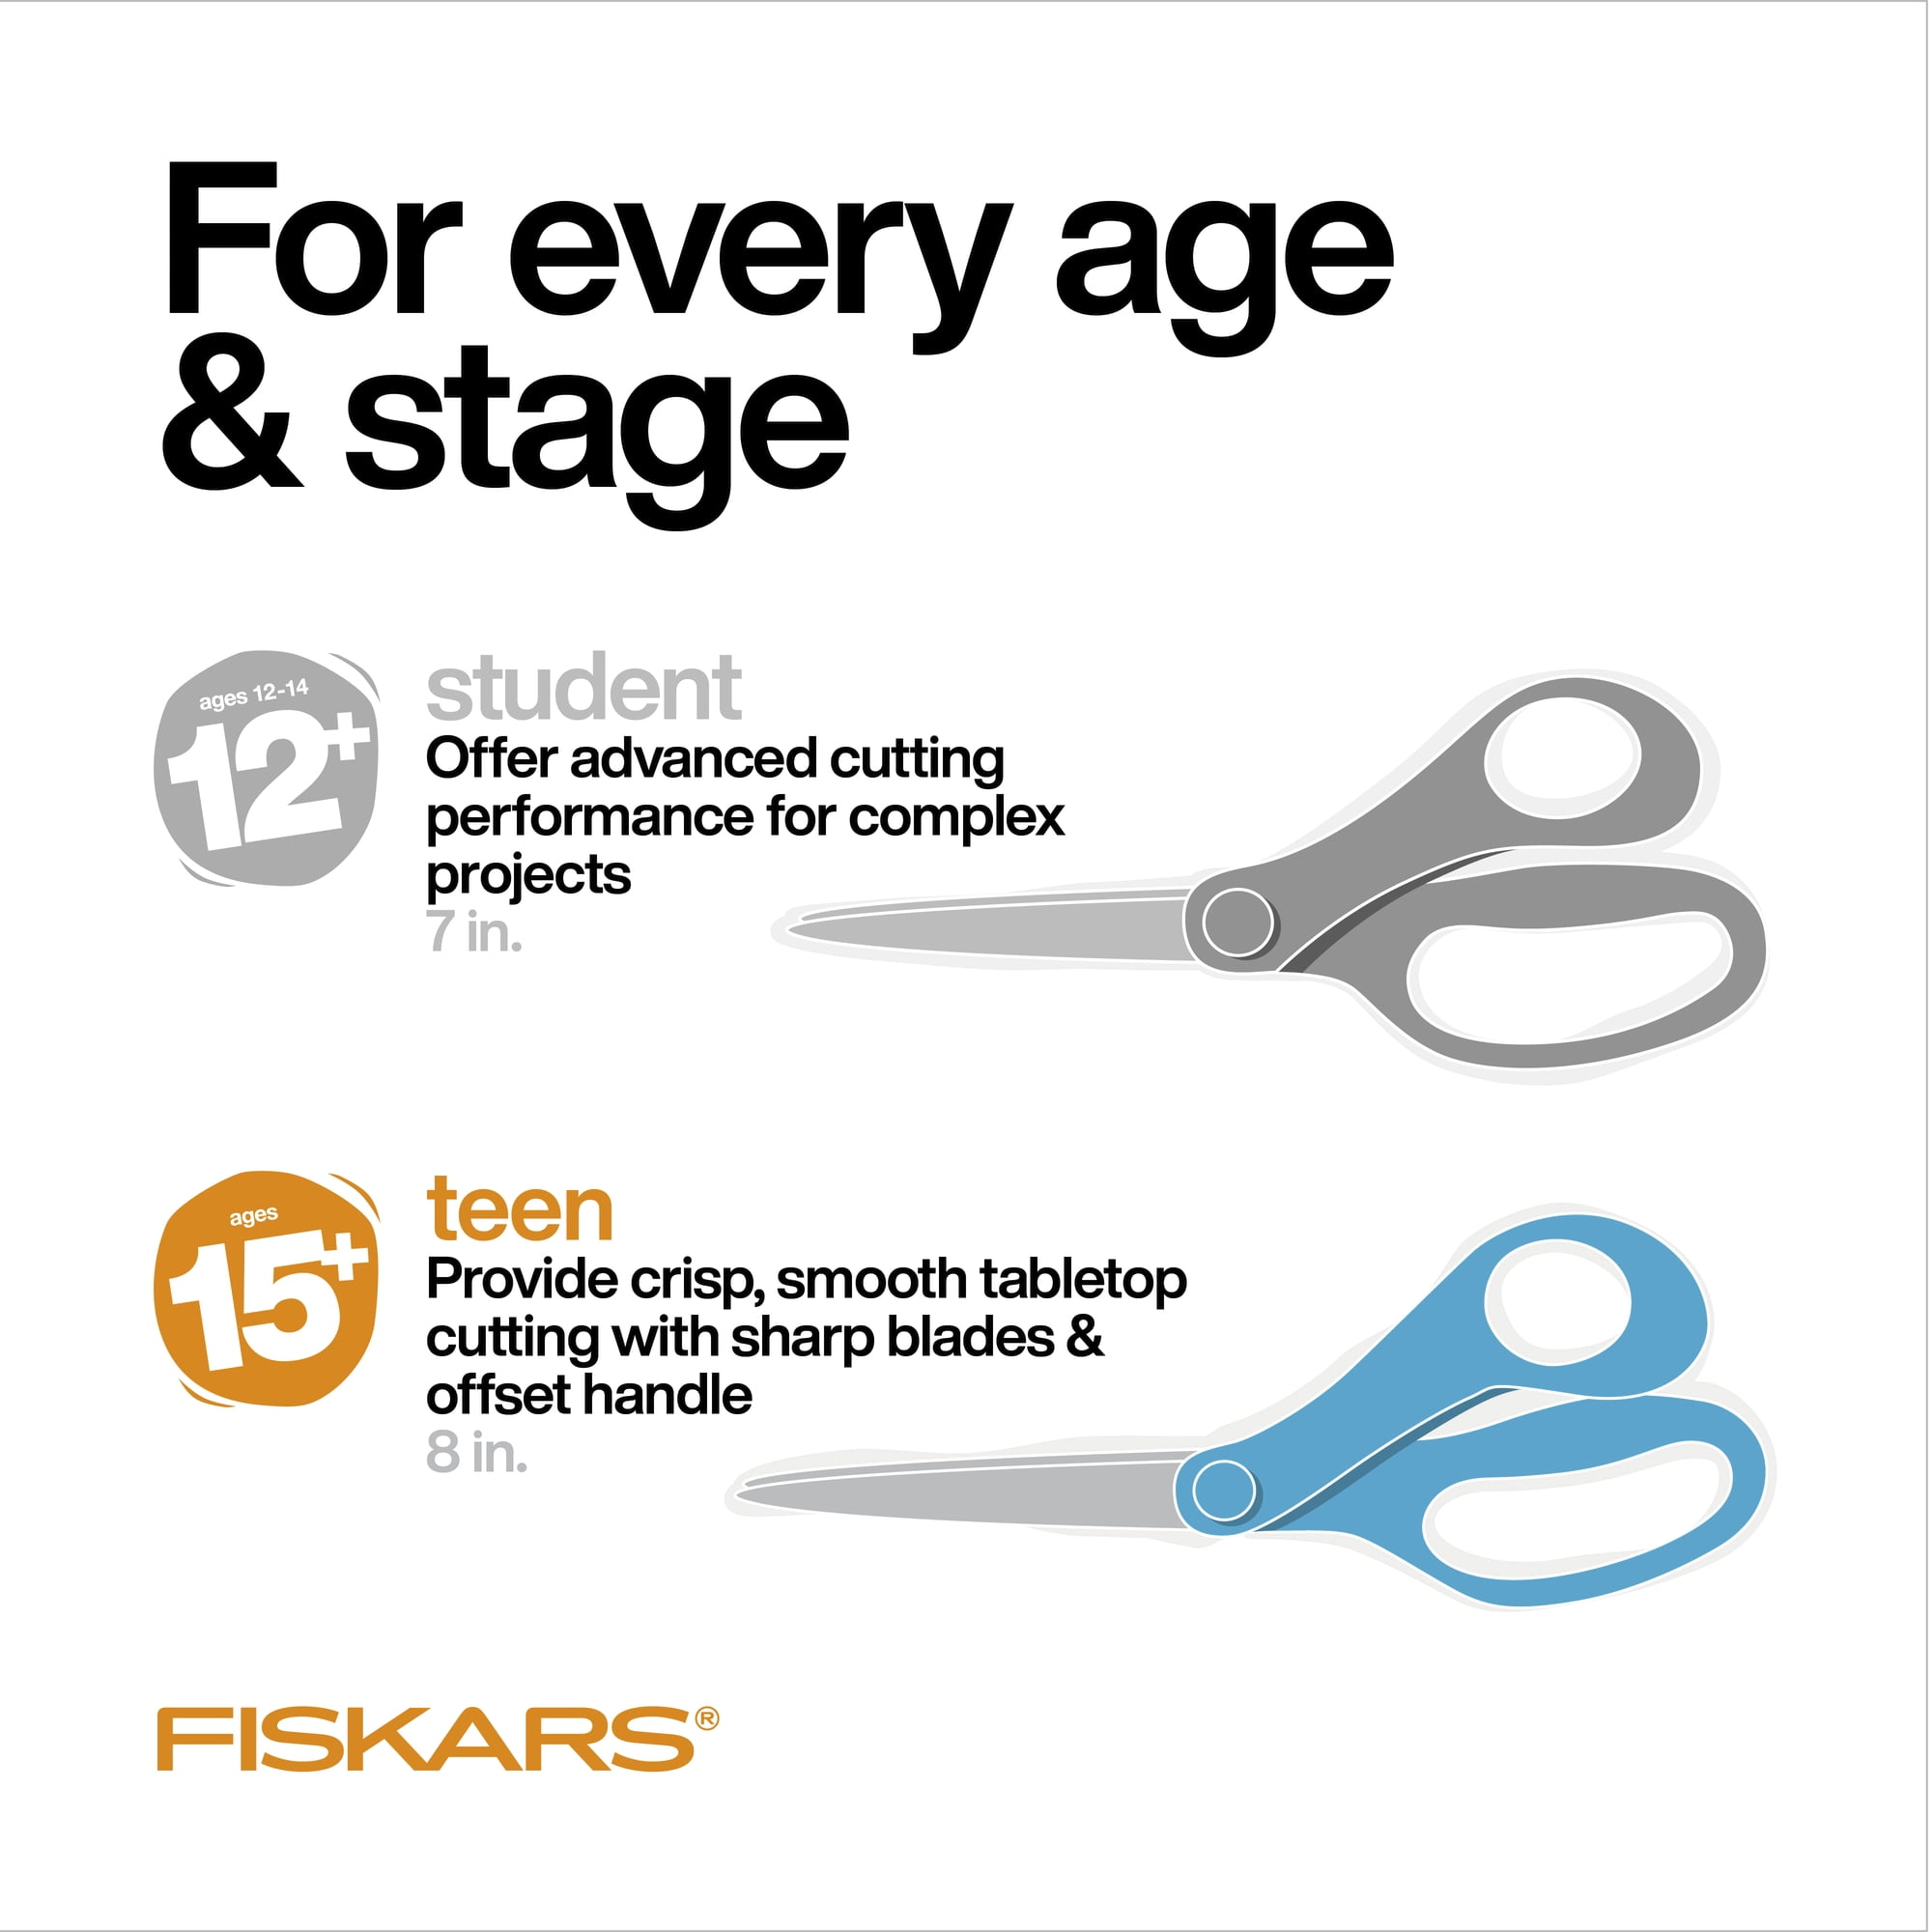 Fiskars 8 in. 2 pack Bloom and Pink Limited Edition Scissors Set by Fiskars  | Joann x Ribblr